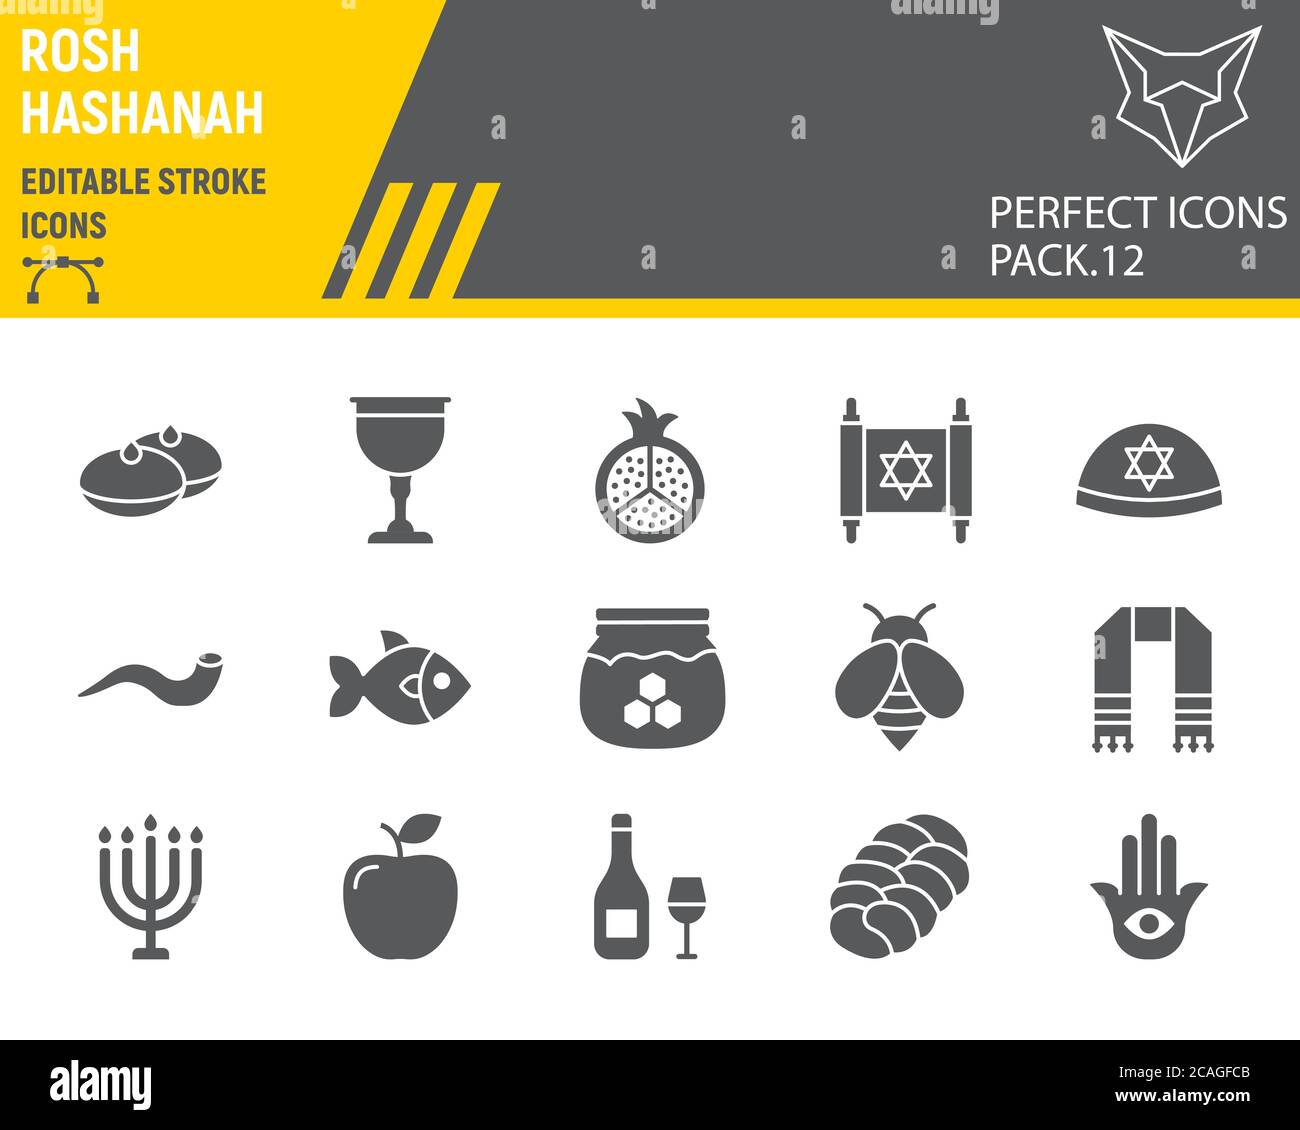 Rosh hashanah glyph icon set, hanukkah collection, vector sketches, logo illustrations, shana tova icons, rosh hashanah signs solid pictograms Stock Vector